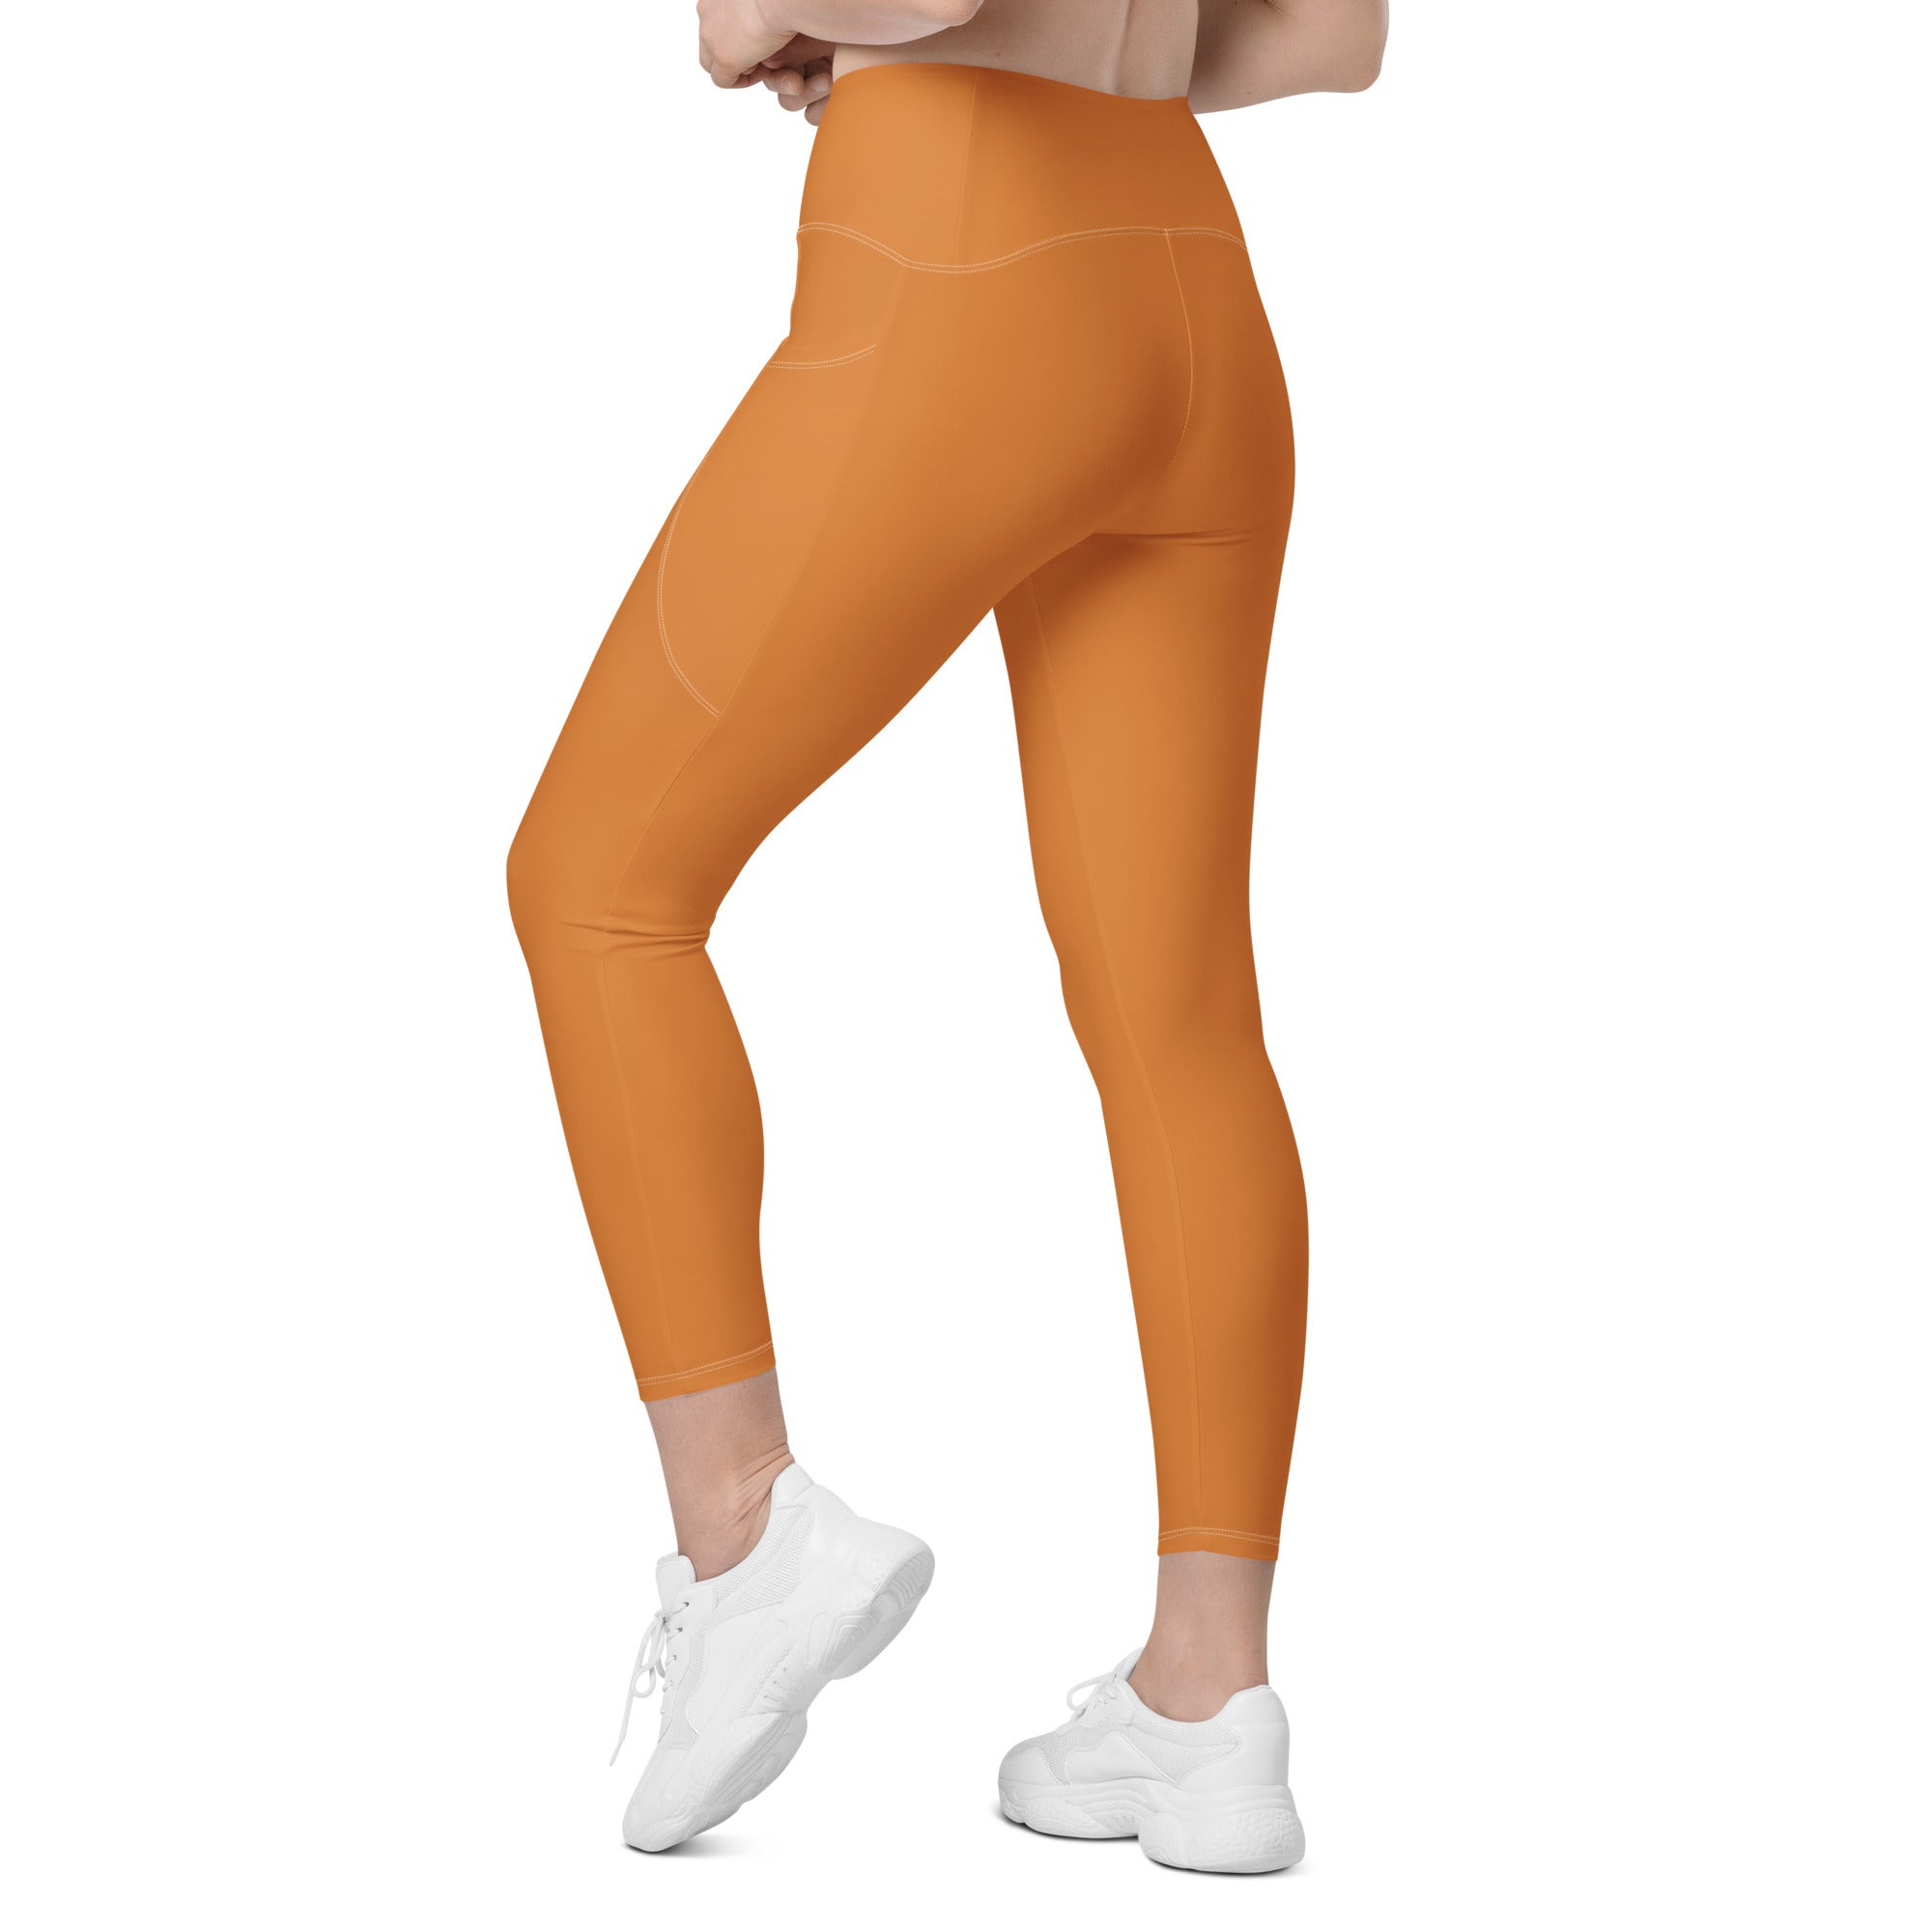 Tangerine Orange Leggings With Pockets